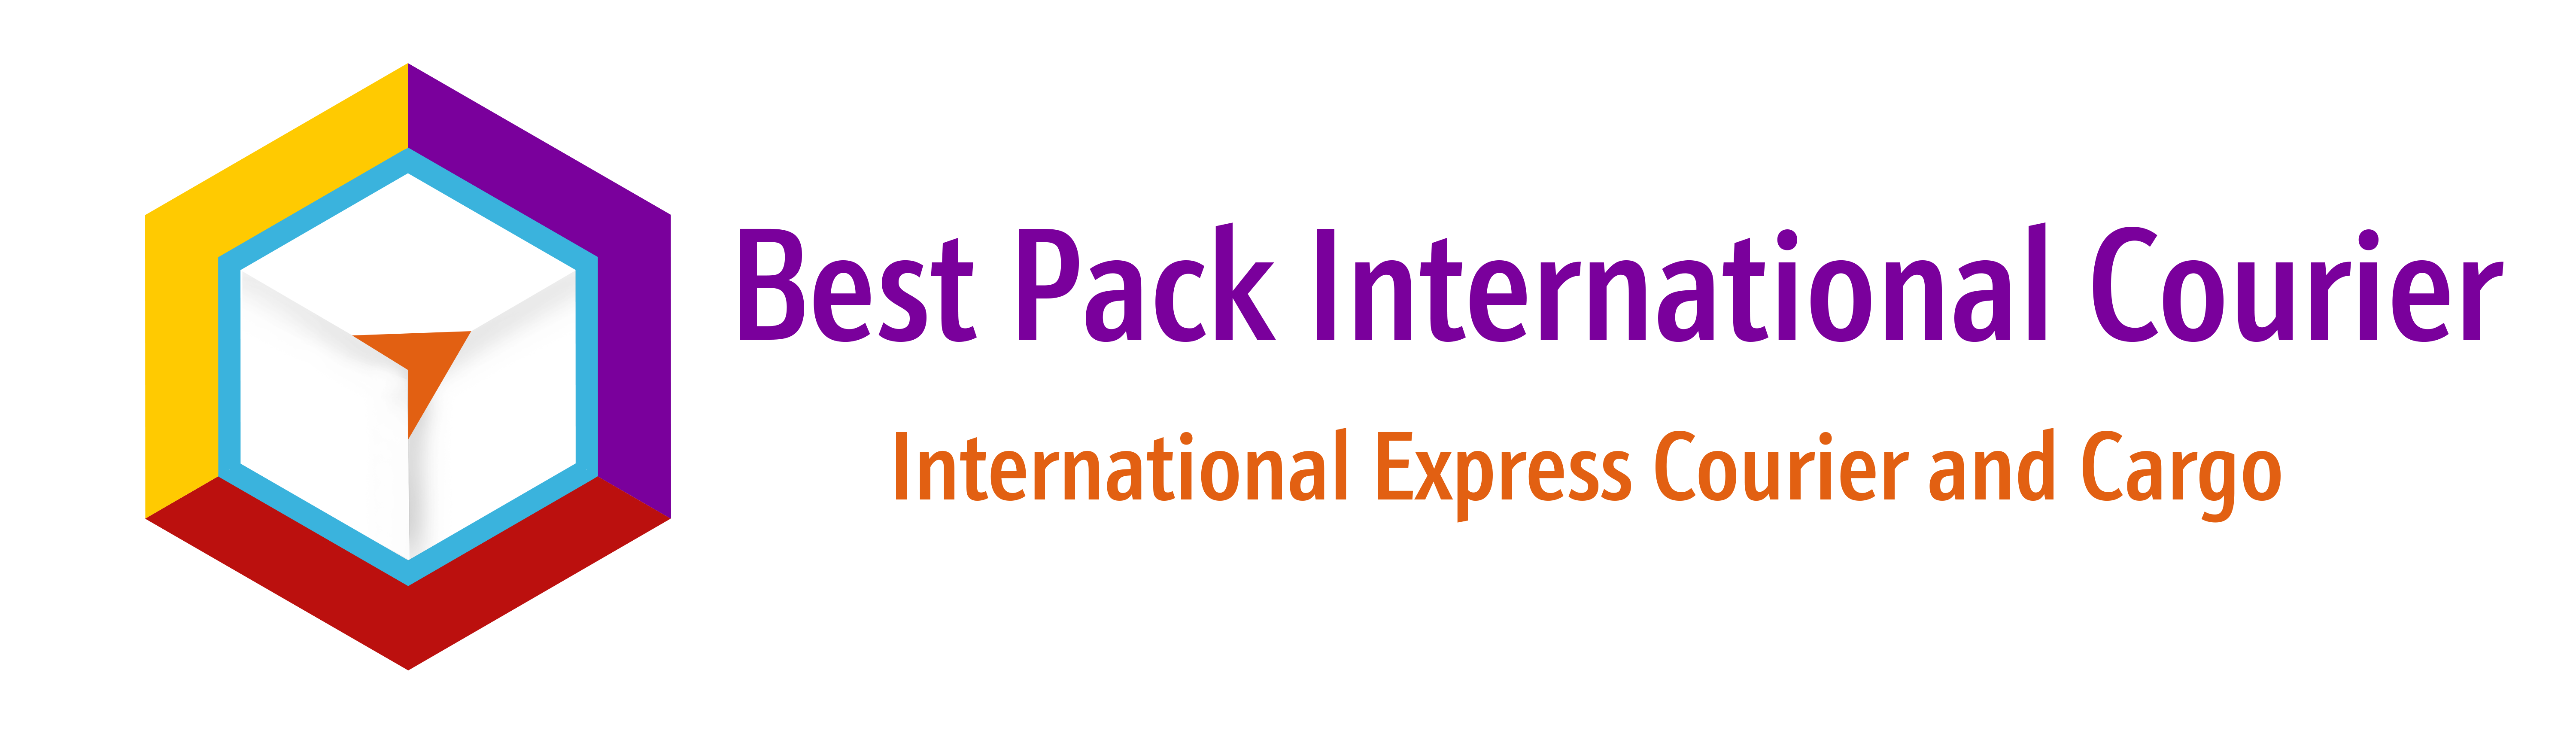 Best pack international courier